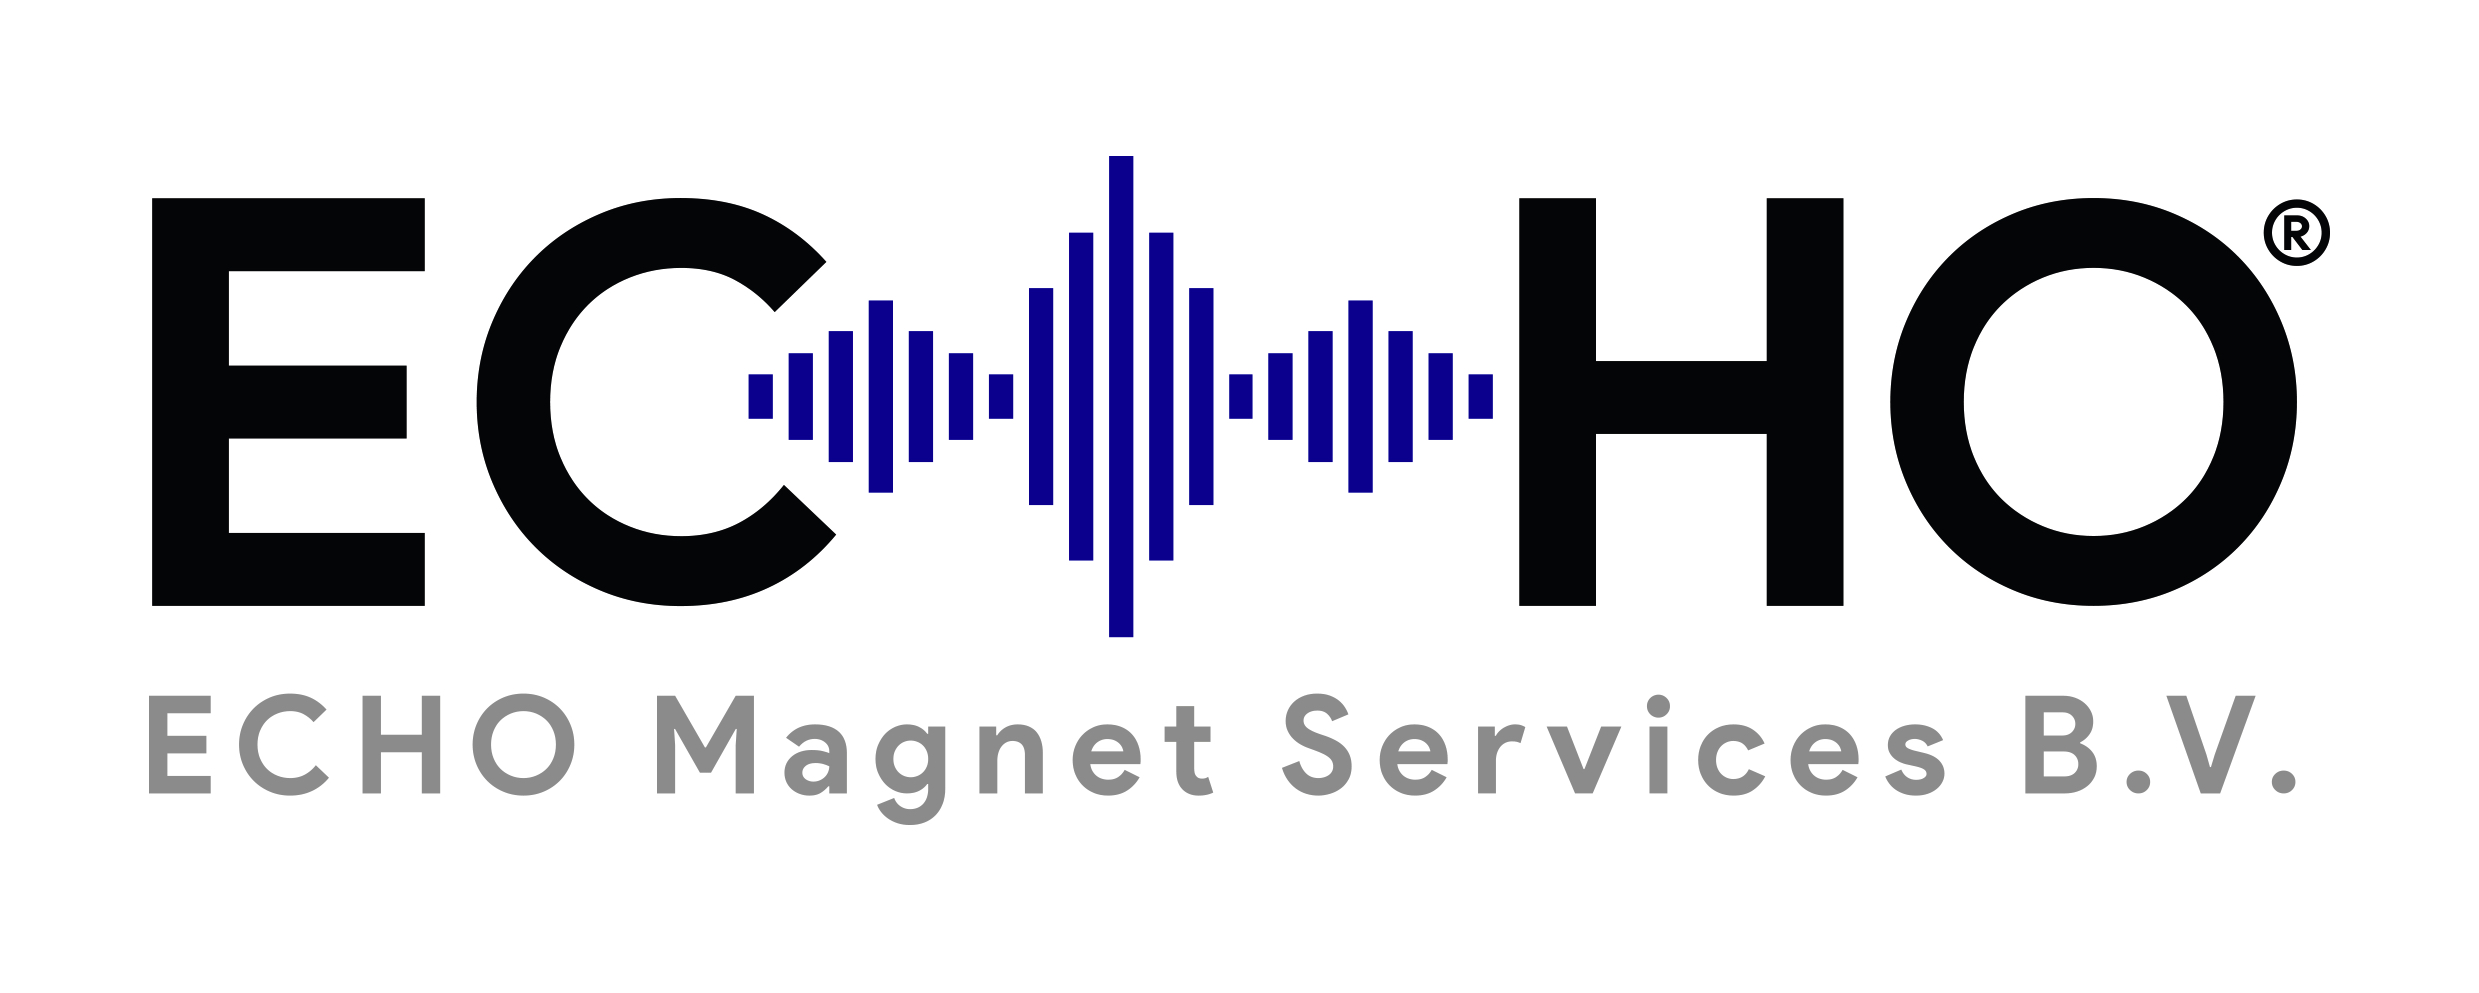 Echo Magnet Services